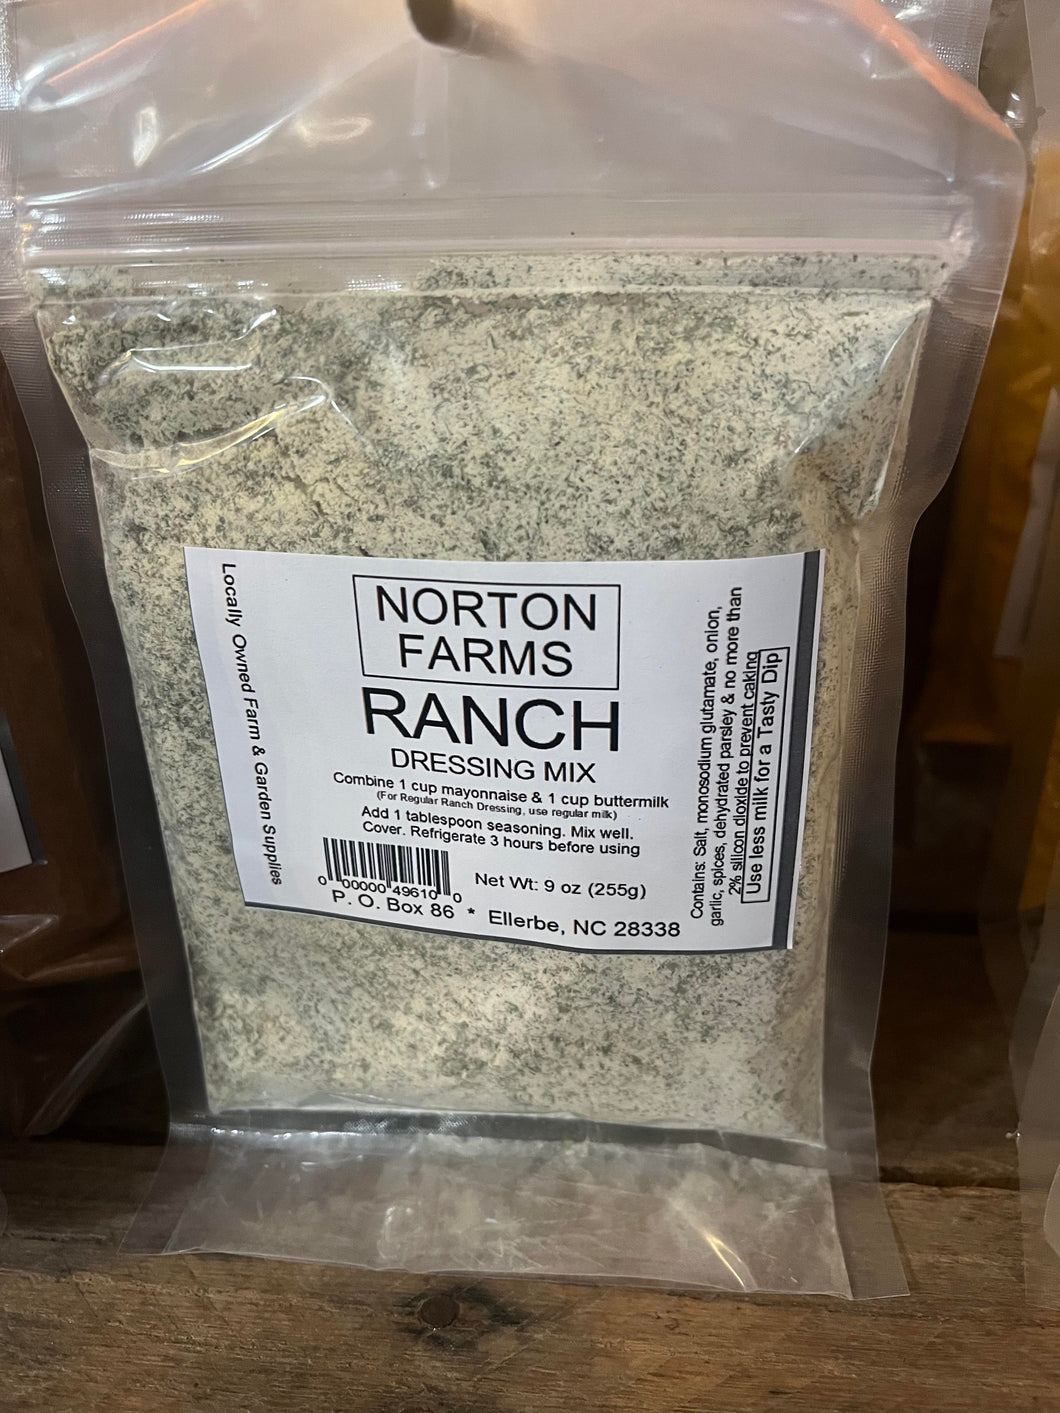 Norton Farms Soul Food Seasoning